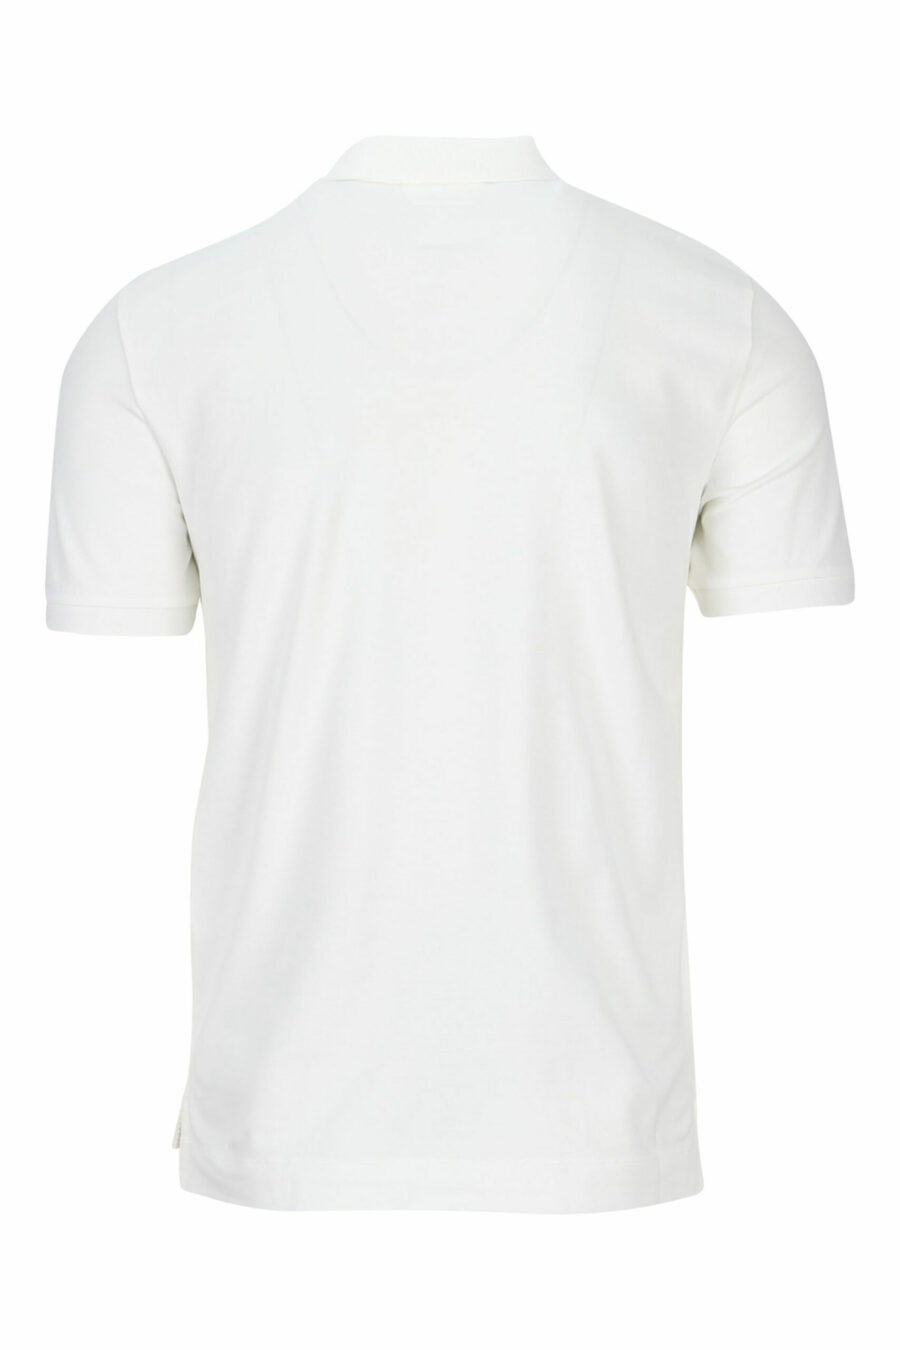 Weißes Poloshirt mit Mini-Logoaufnäher - 7620943564679 1 skaliert